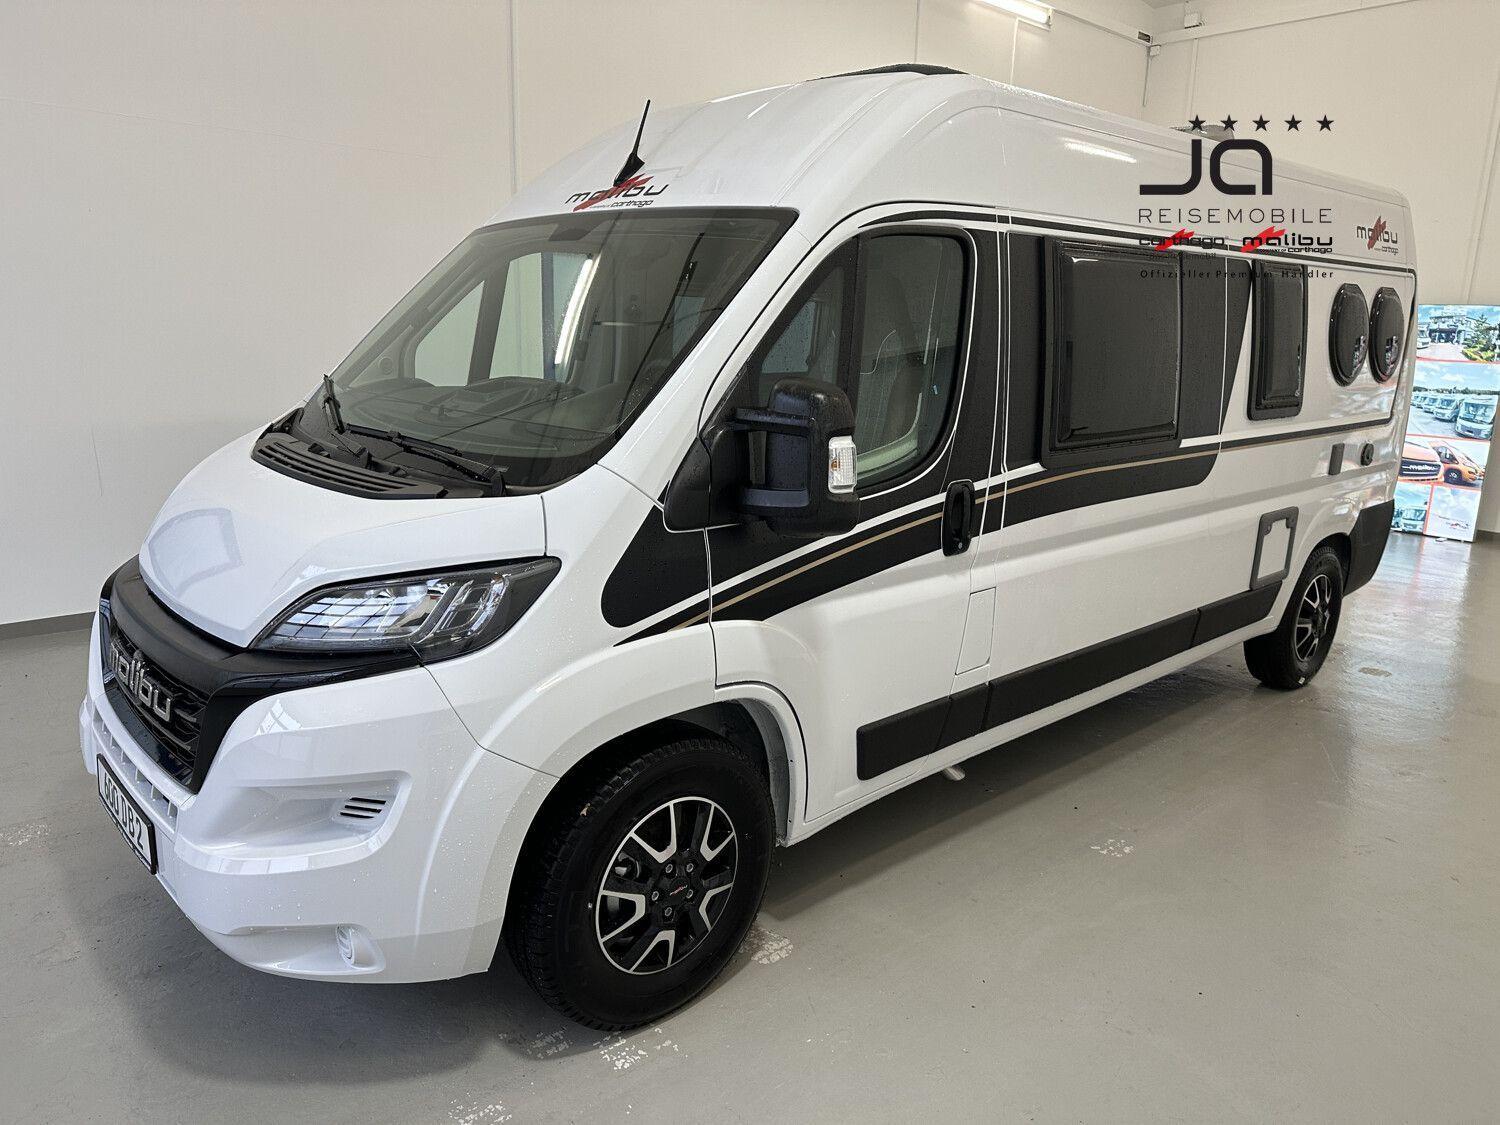 Wohnmobil 🚐 Malibu Van compact 600 LE kaufen